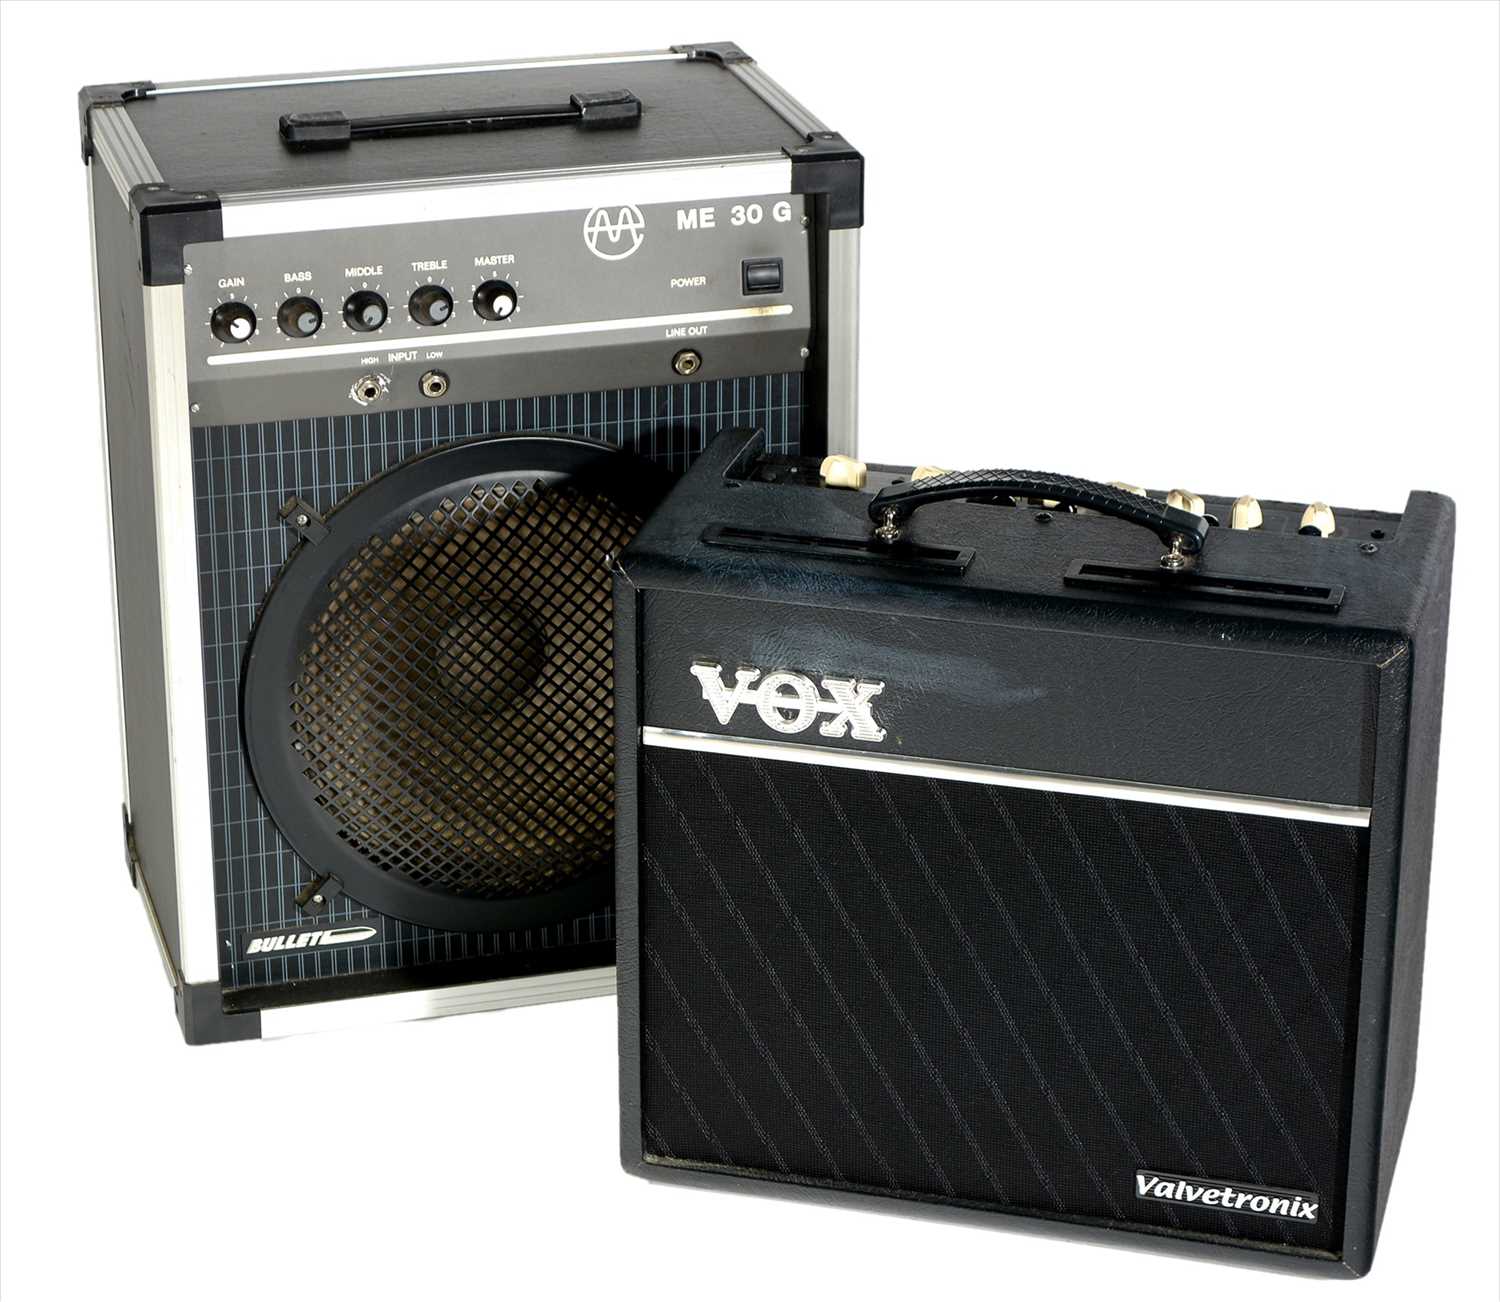 Lot 97 - Vox VT-40 amplifier, Bullet amp and pedals.